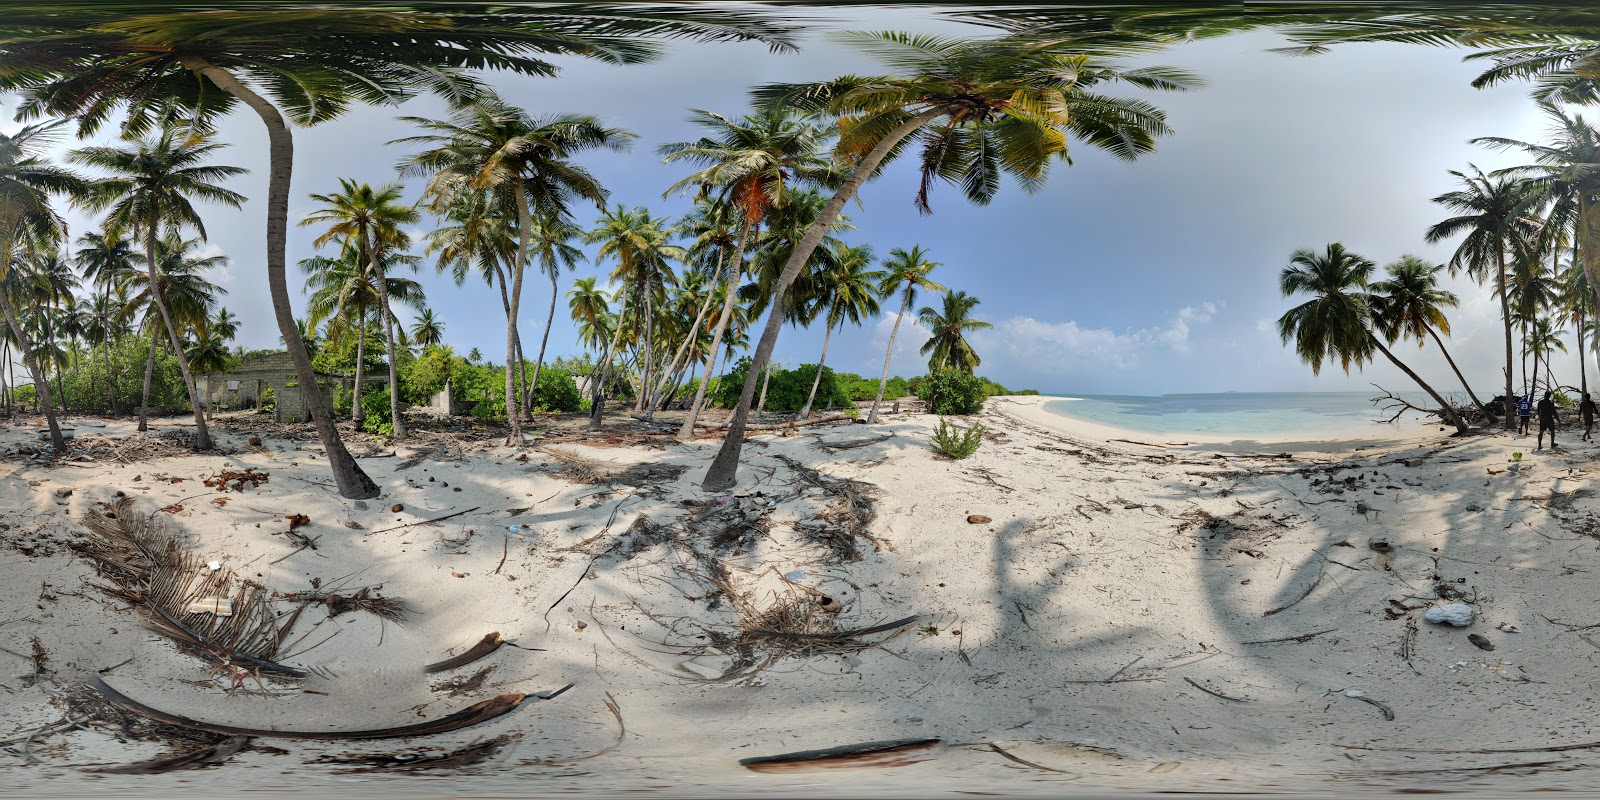 Foto de Hathifushi beach área selvagem